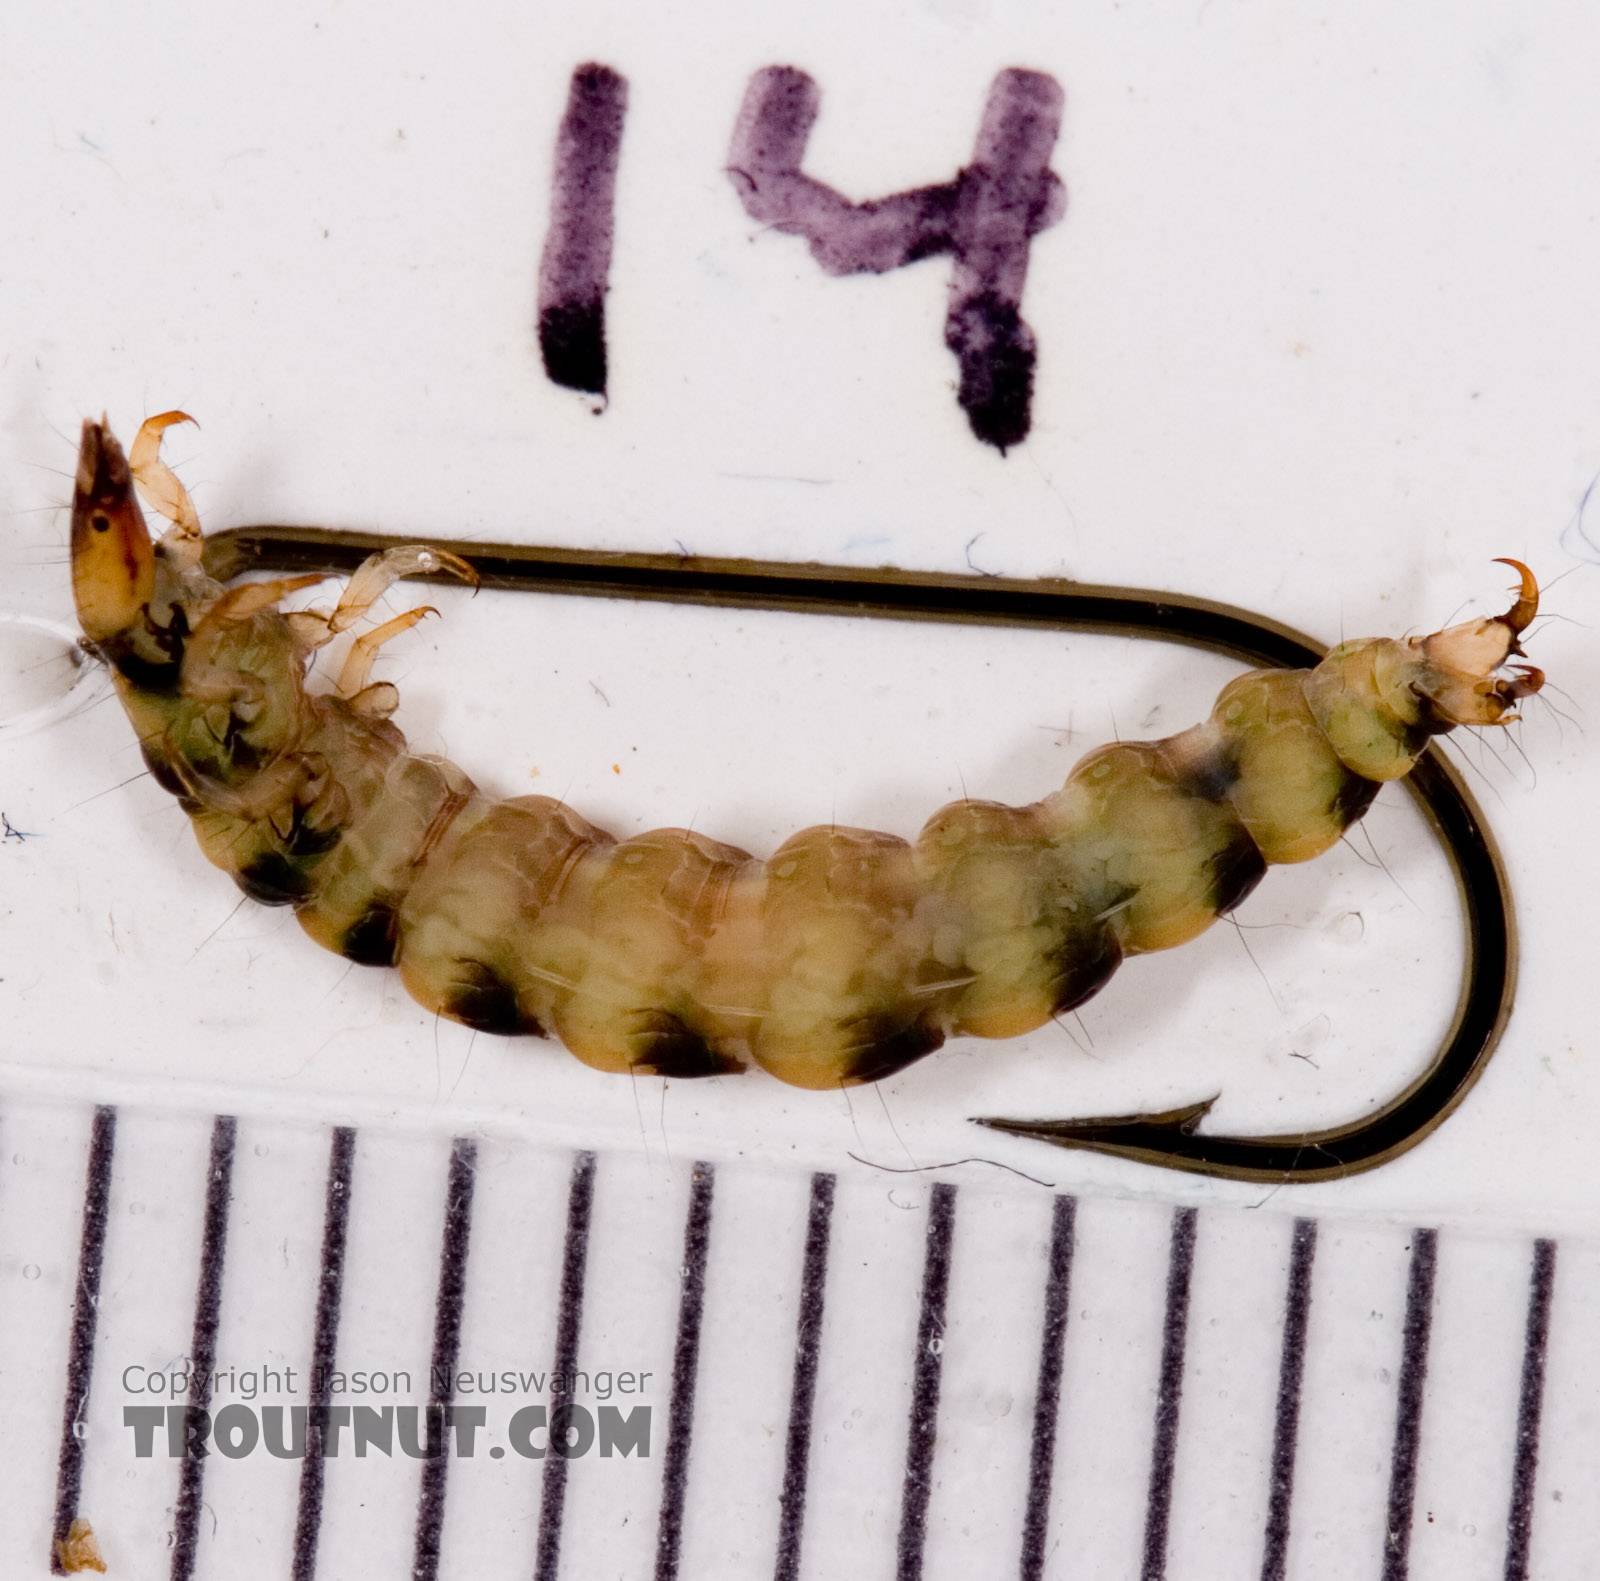 Rhyacophila mainensis (Green Sedge) Caddisfly Larva from Fall Creek in New York